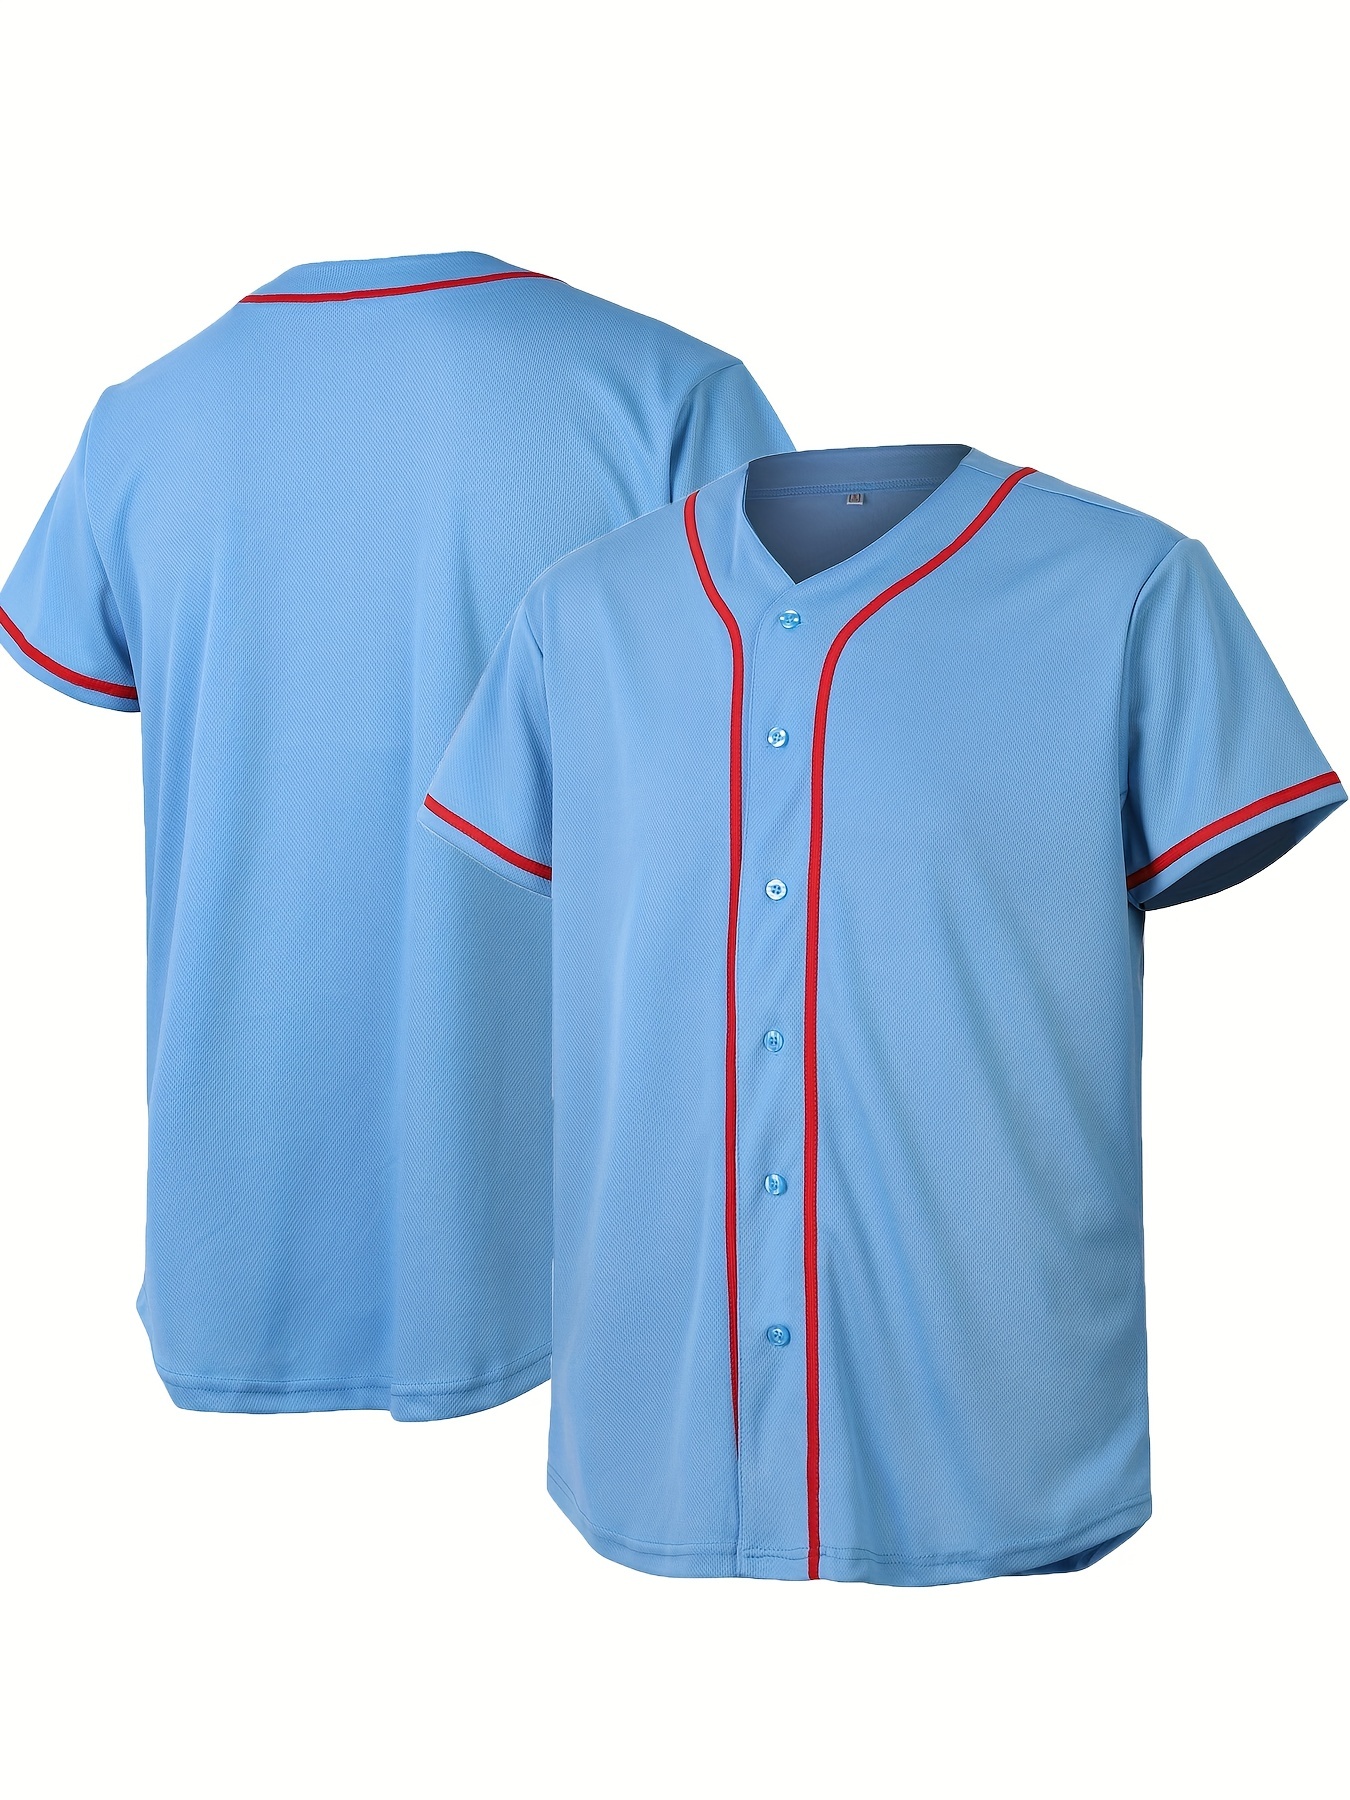 Mens Baseball JERSEY Polyester Plain TShirt Team Sport Button Fashion Tee  Casual